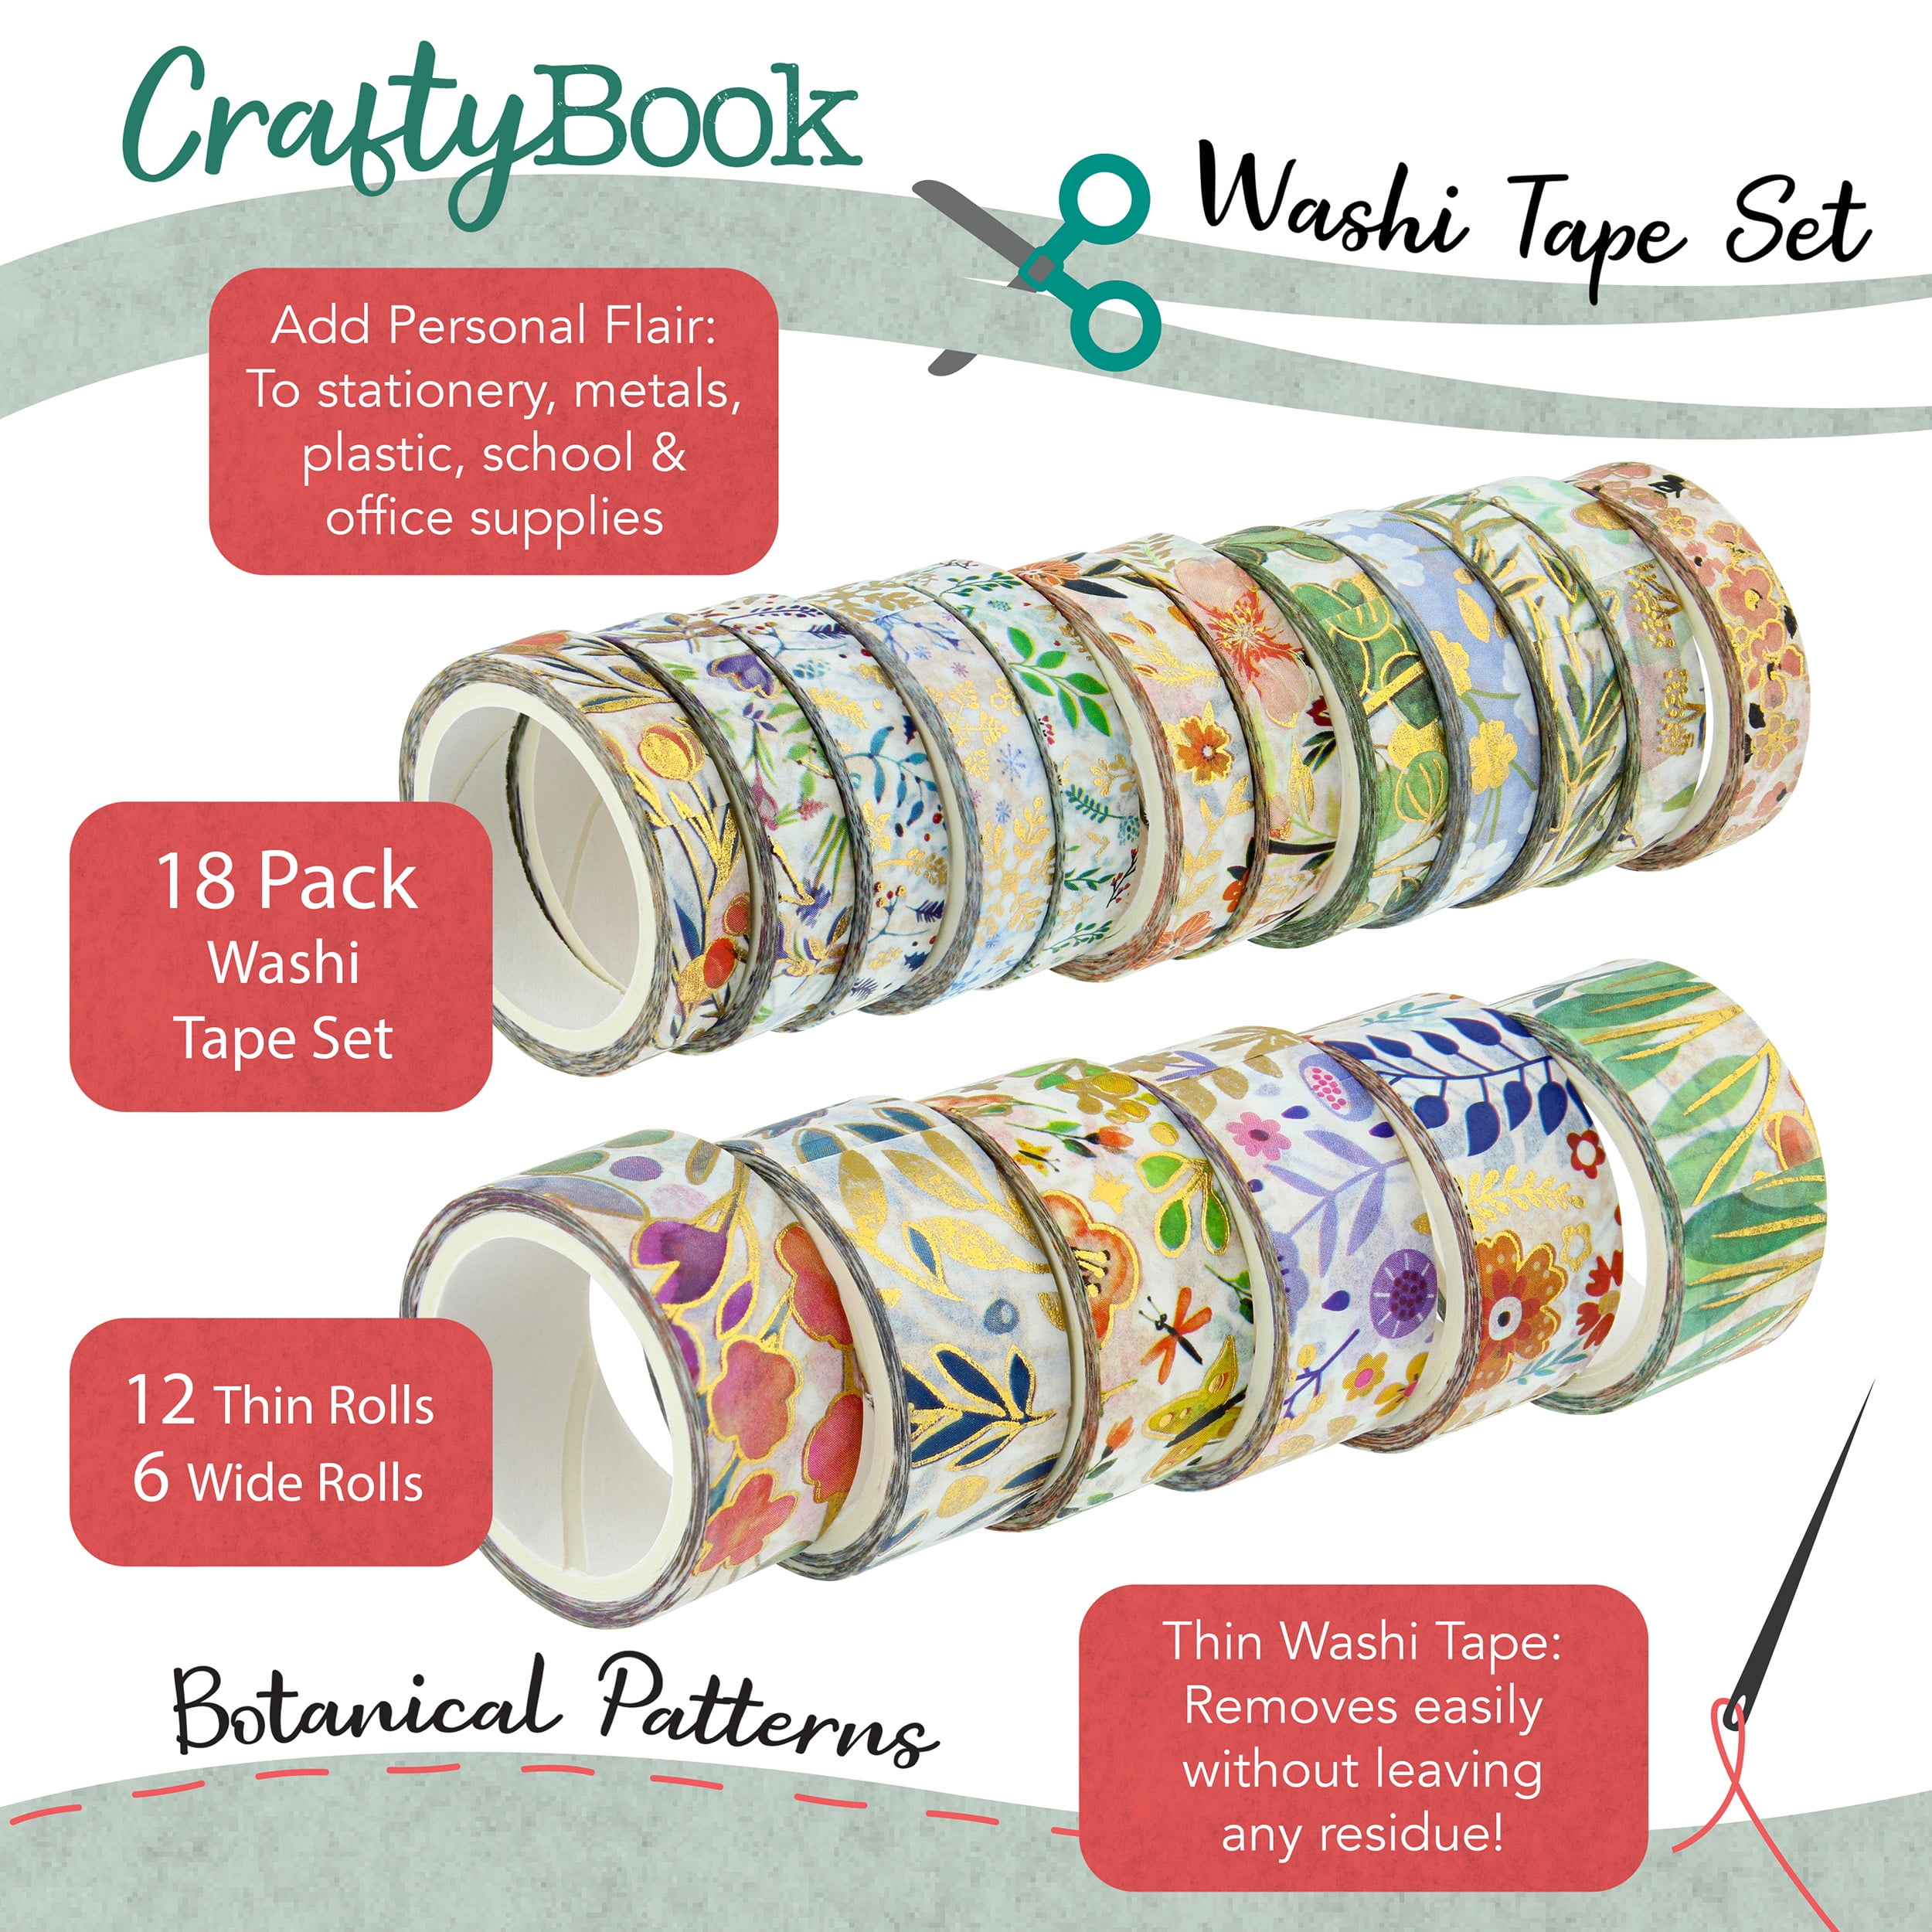 Craftybook Washi Tape Set - 18pc Floral Aesthetic Washi Tape for Journaling